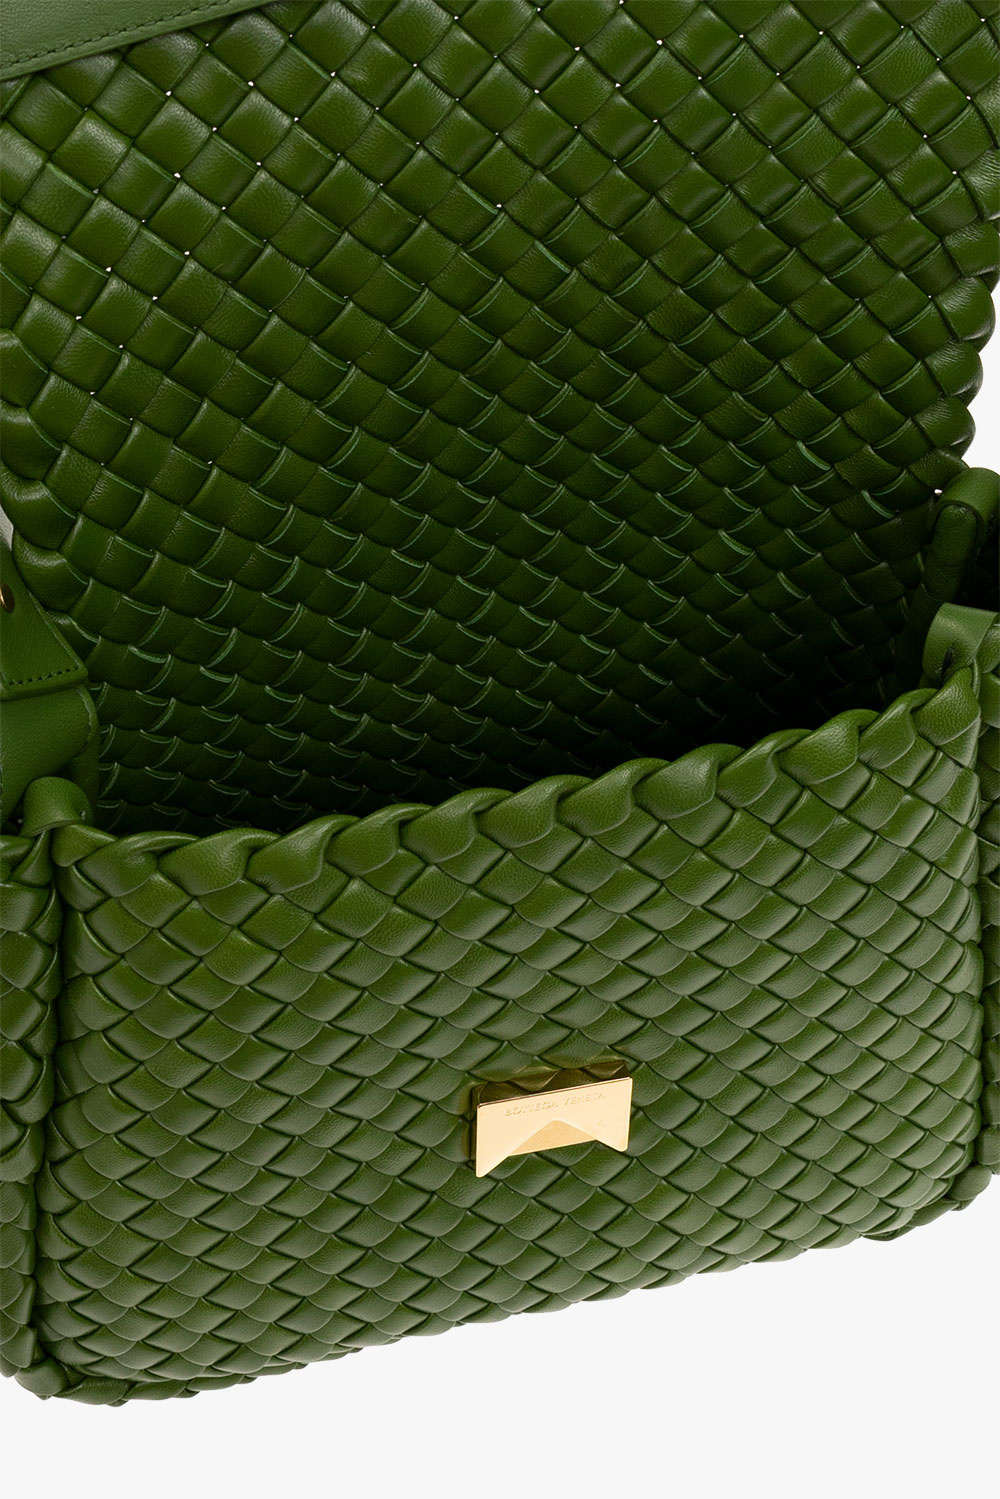 Cobble Small Leather Shoulder Bag in Green - Bottega Veneta